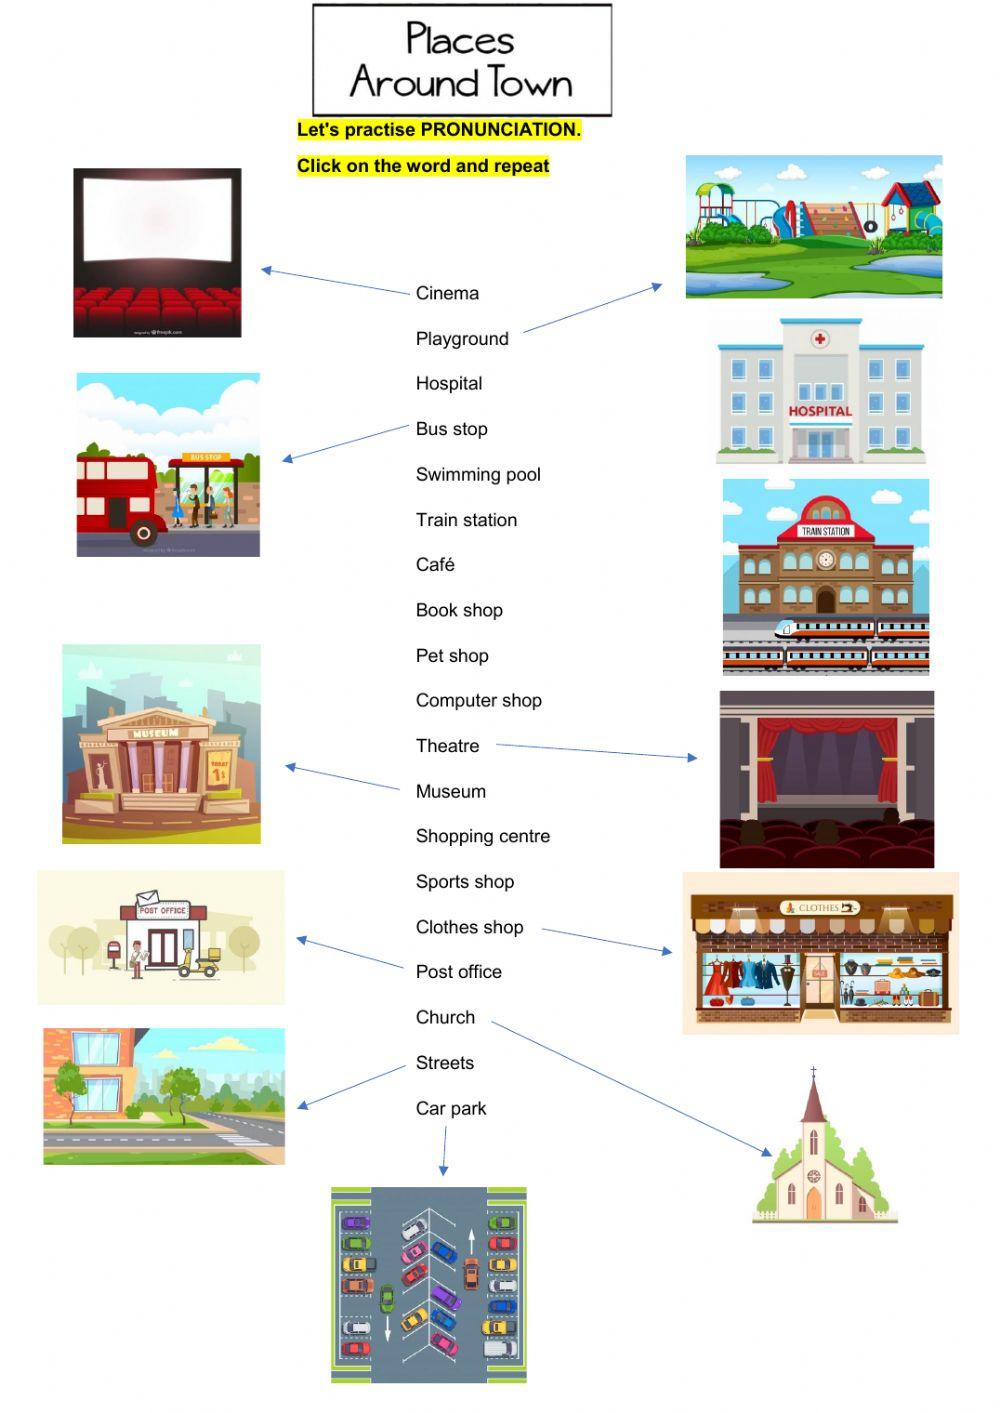 Places around town vocabulary - pronunciation practice